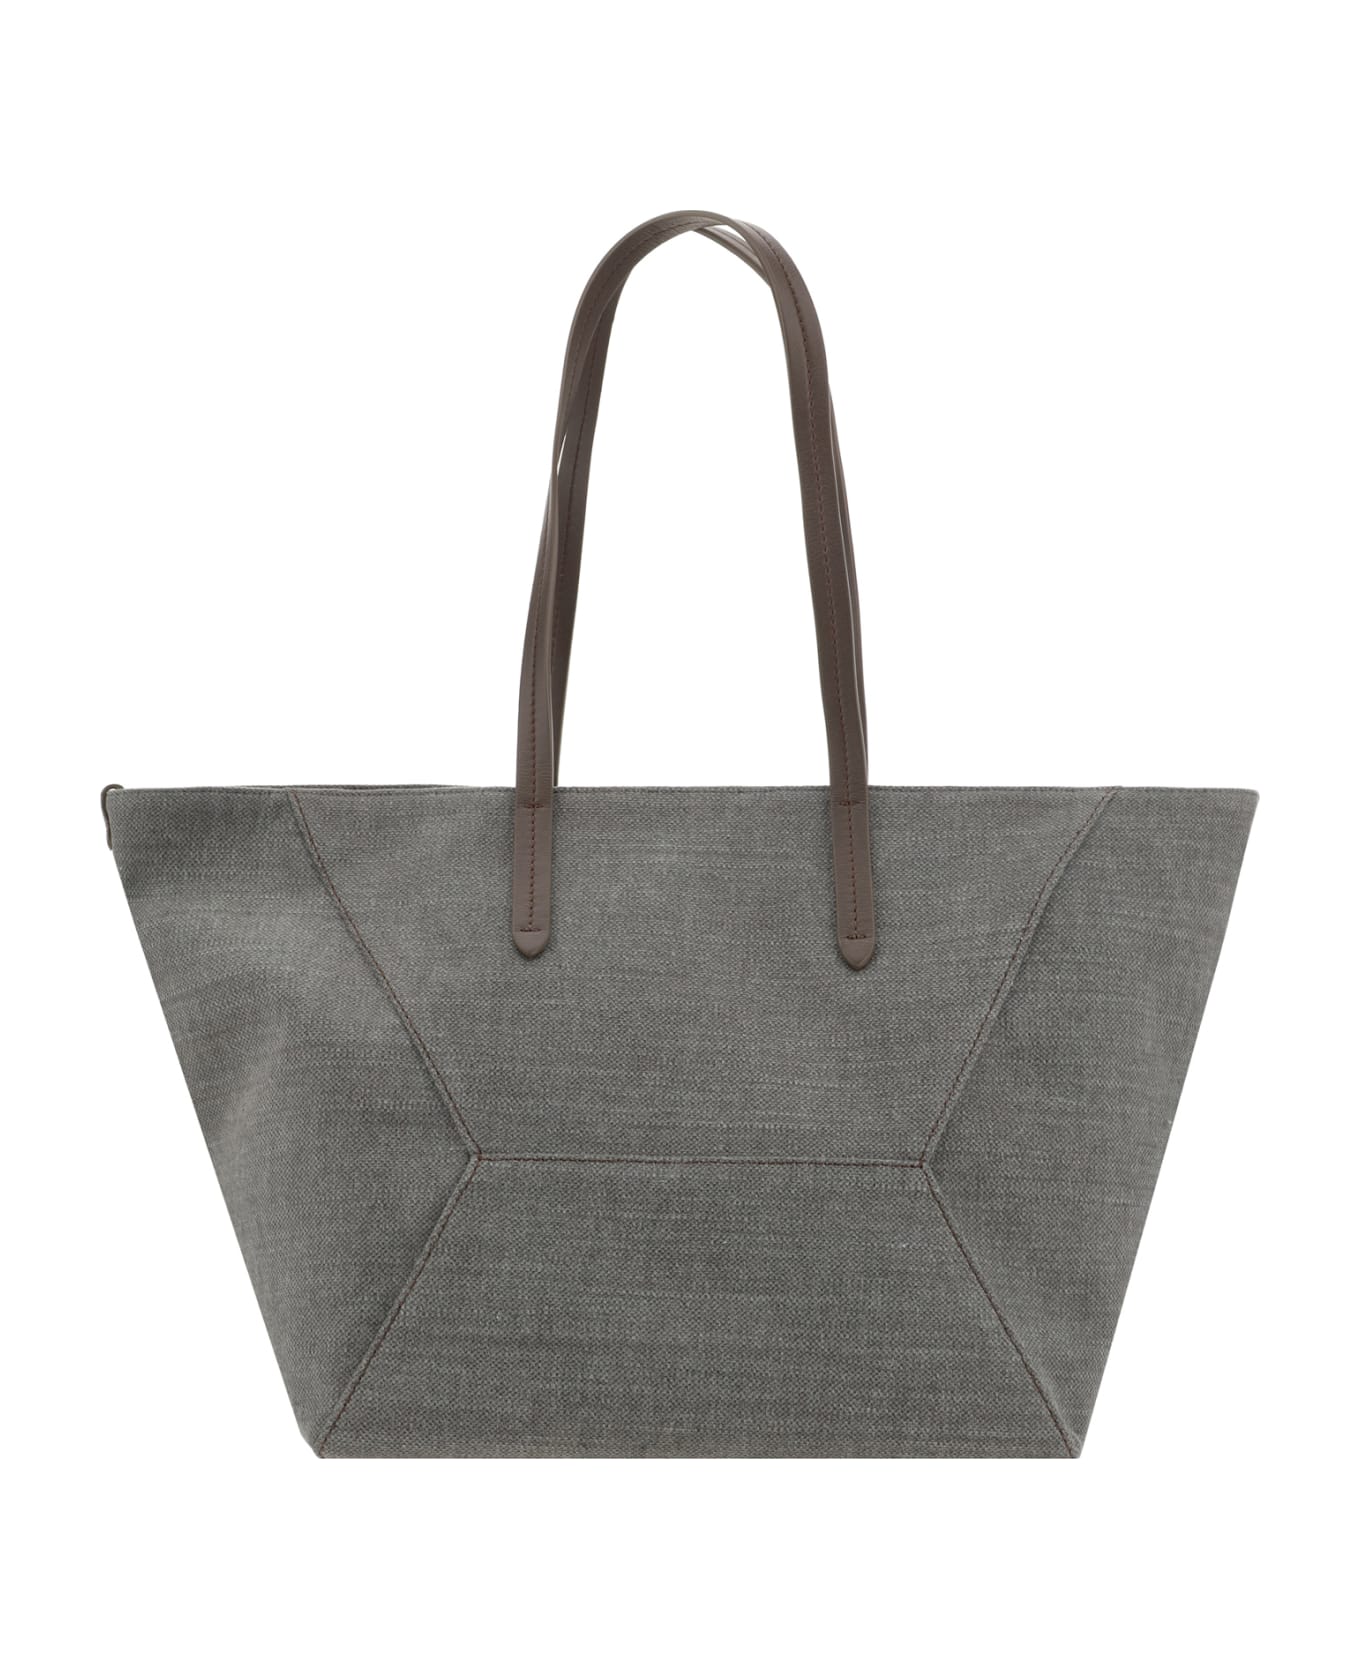 Brunello Cucinelli 'monile' Shopping Bag - Grey Seal